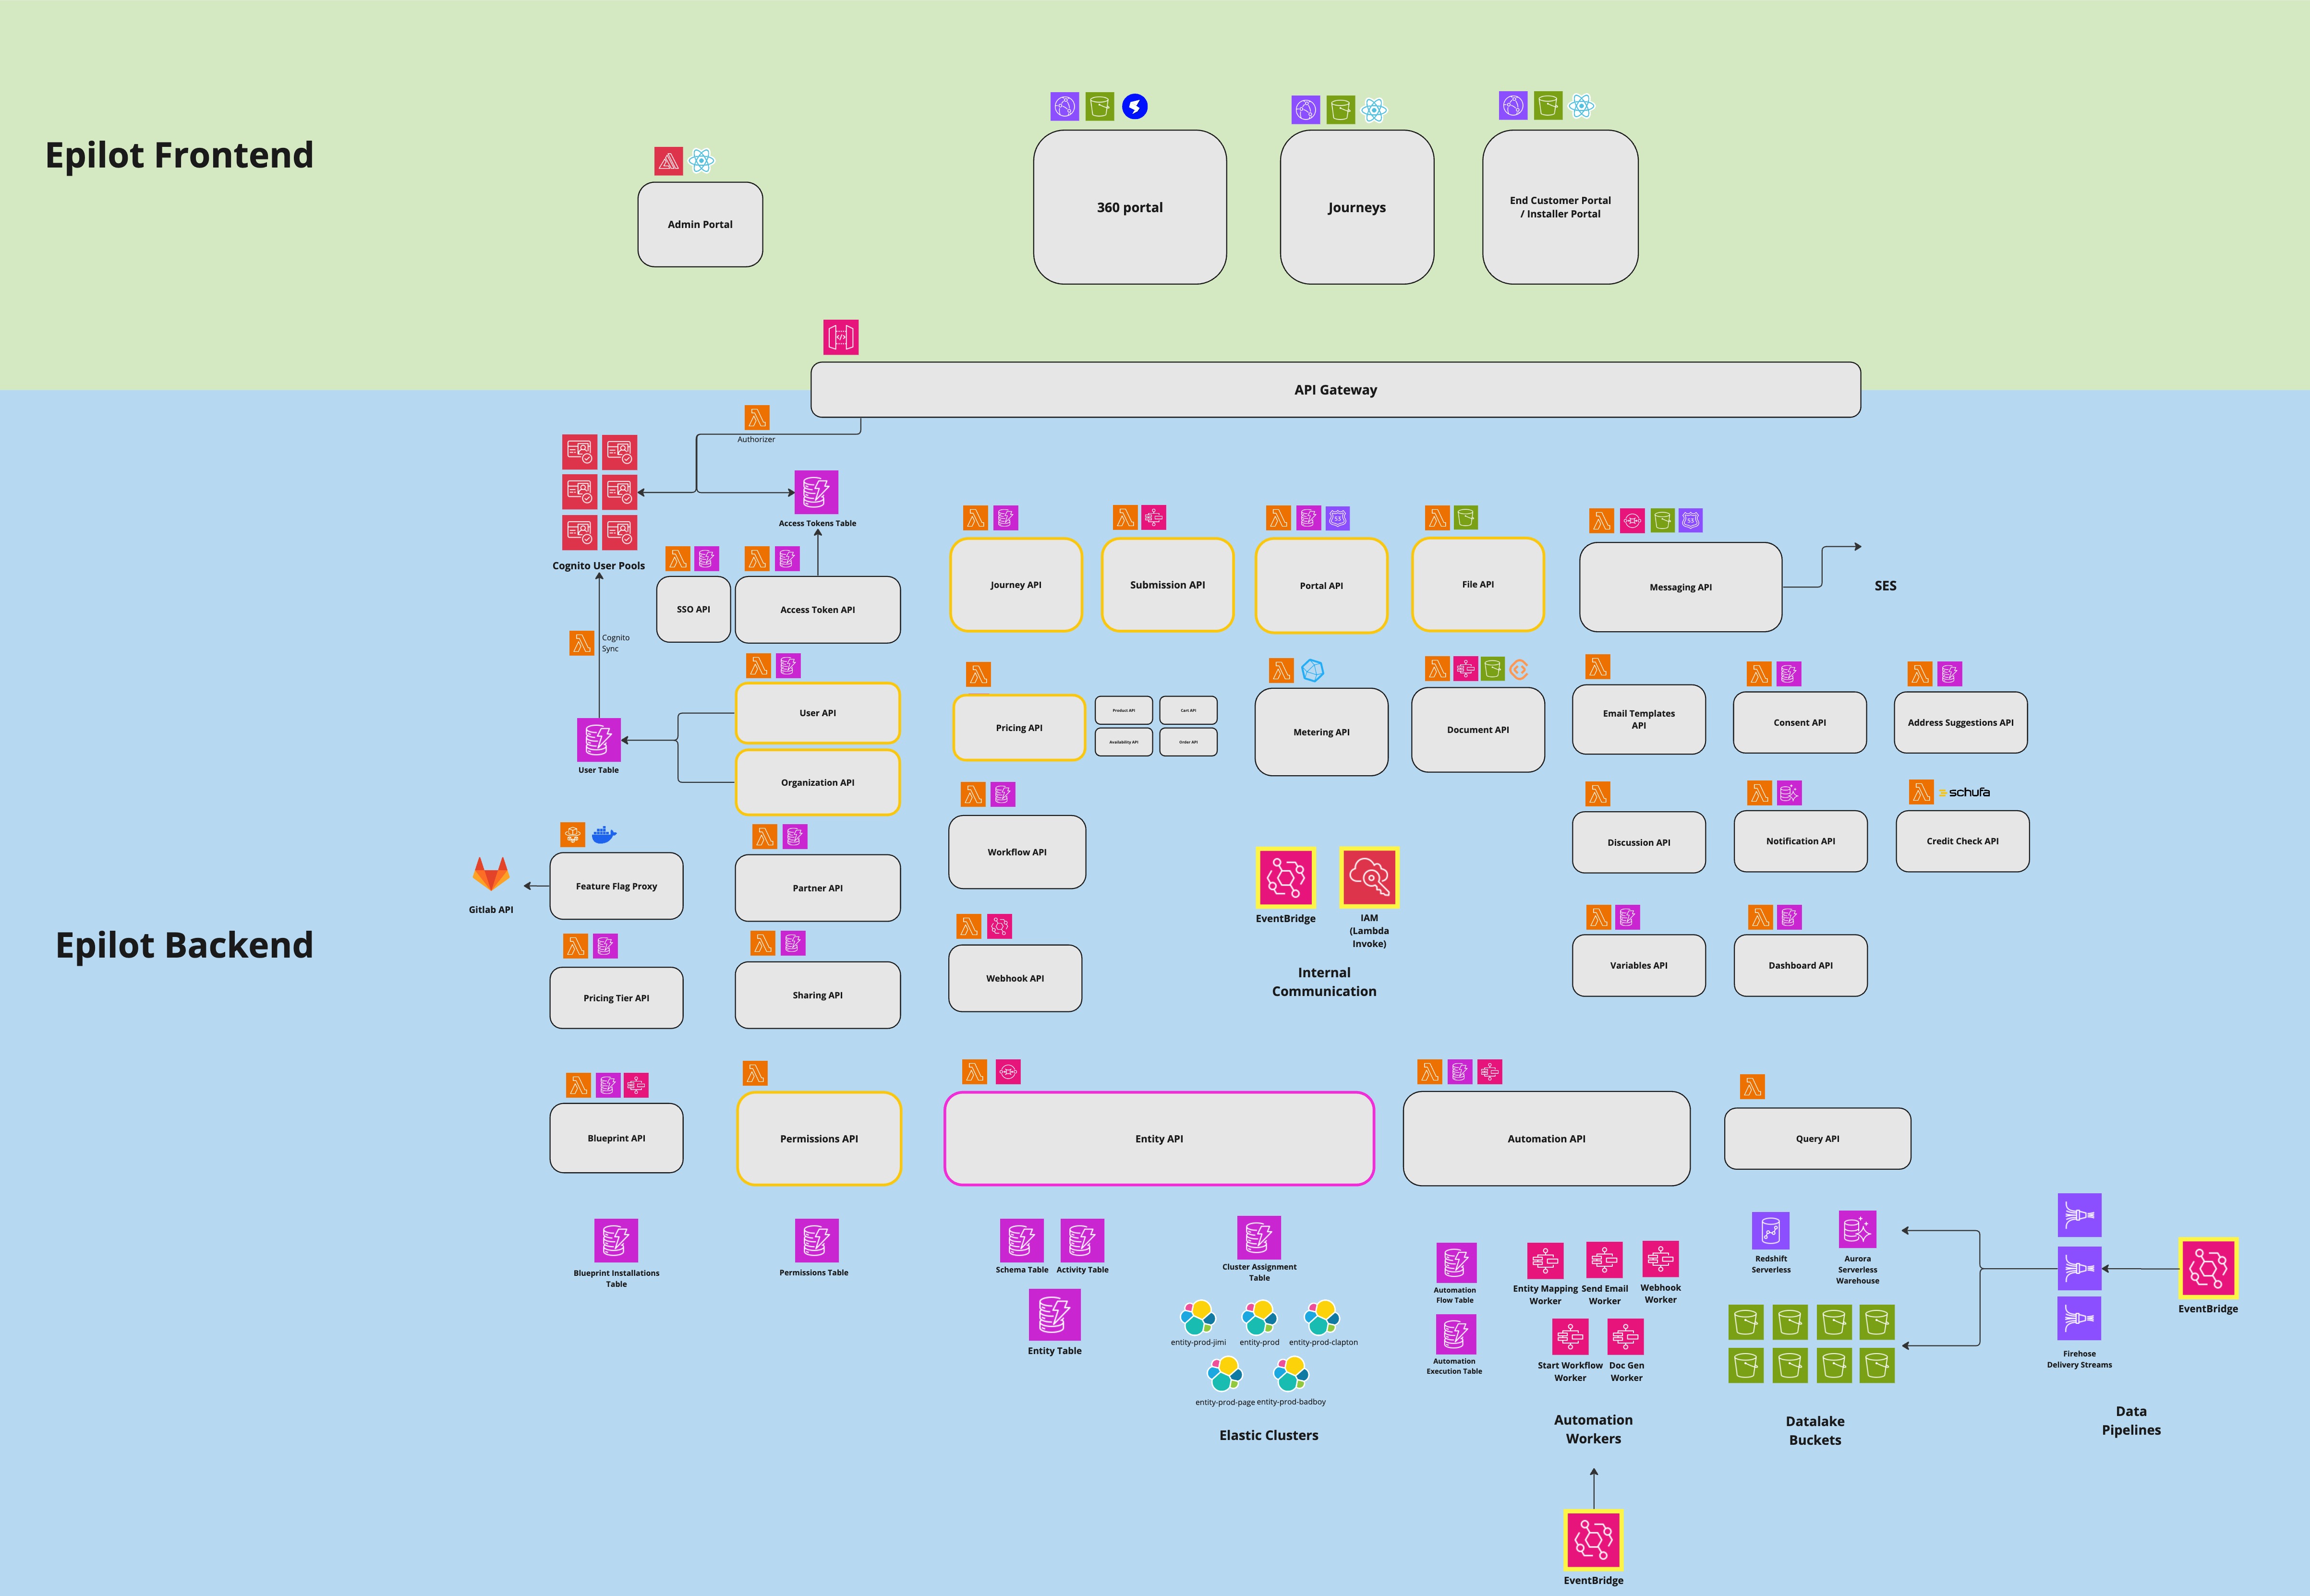 System Architecture Diagram